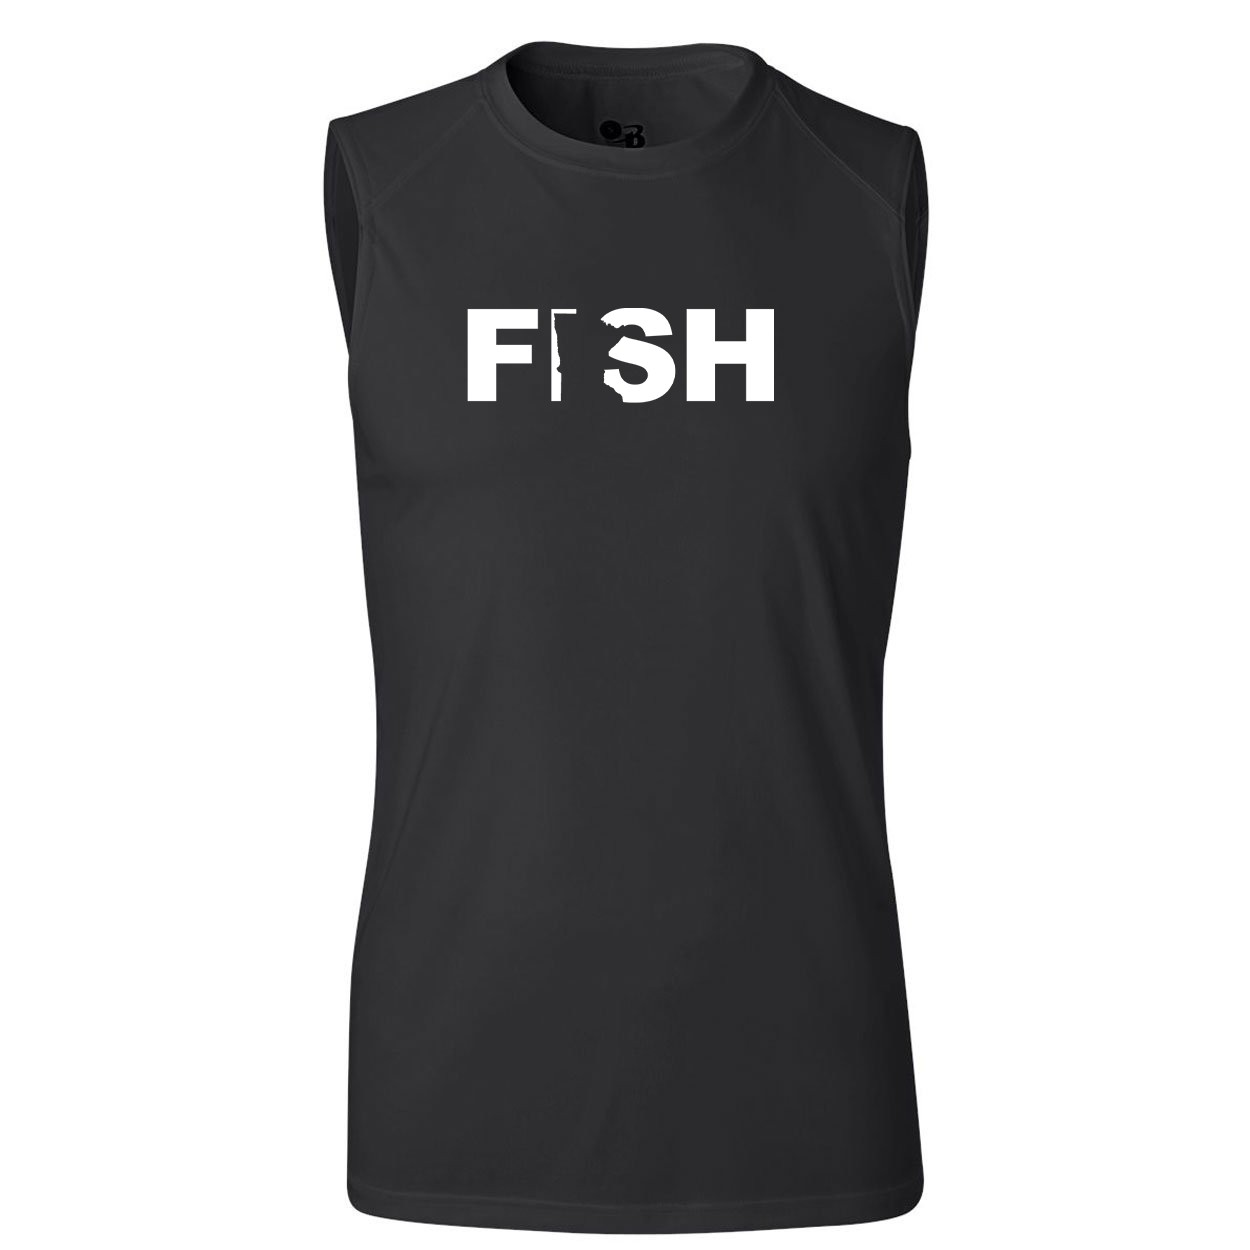 Fish Minnesota Classic Unisex Performance Sleeveless T-Shirt Black (White Logo)